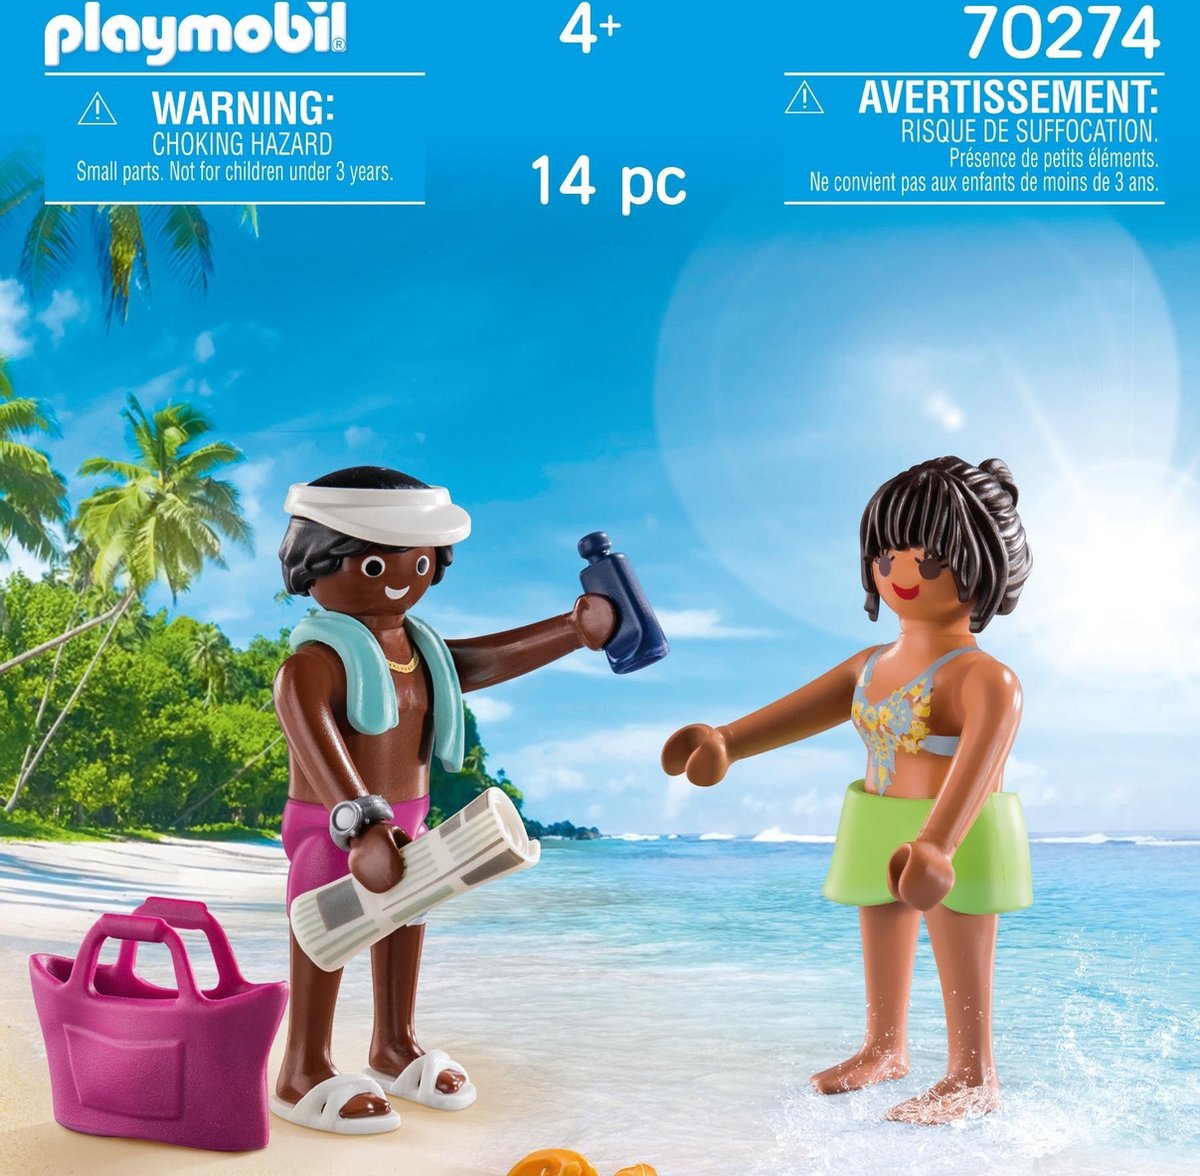 Playmobil 70439 Family Fun - Beach hotel : Vacanciers et